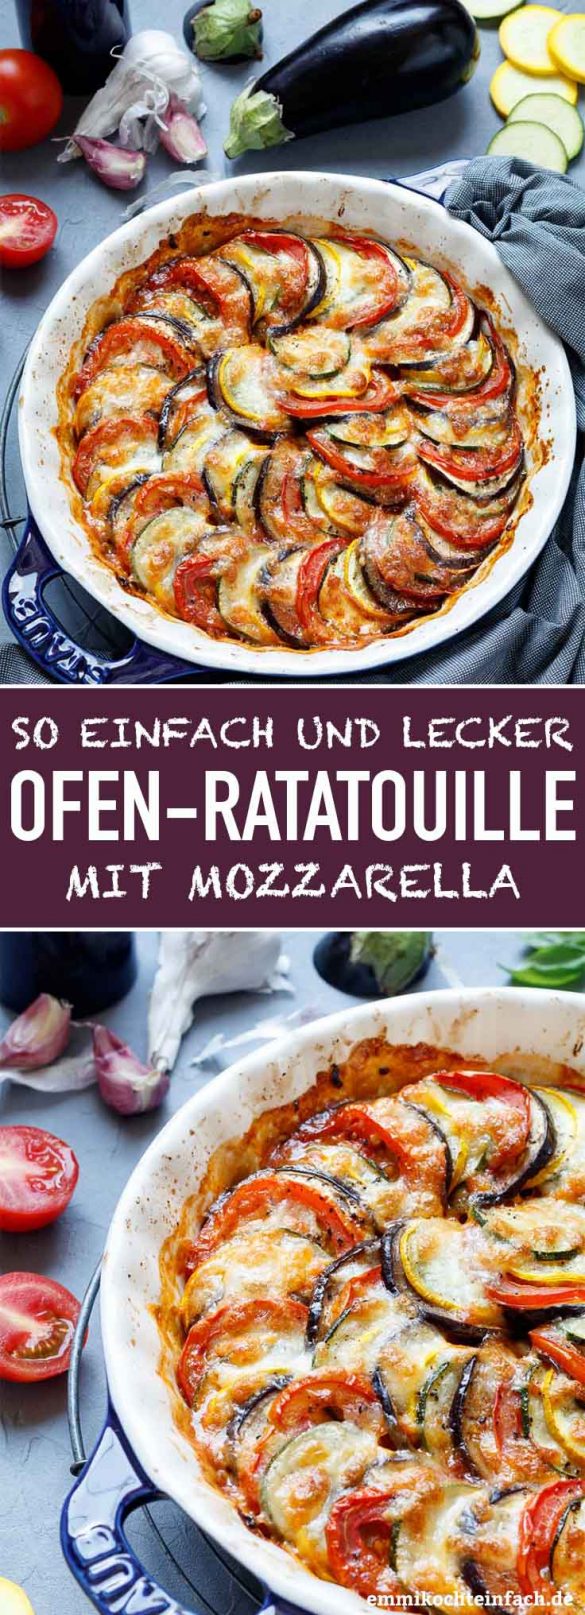 Ratatouille aus dem Ofen mit Mozzarella - emmikochteinfach